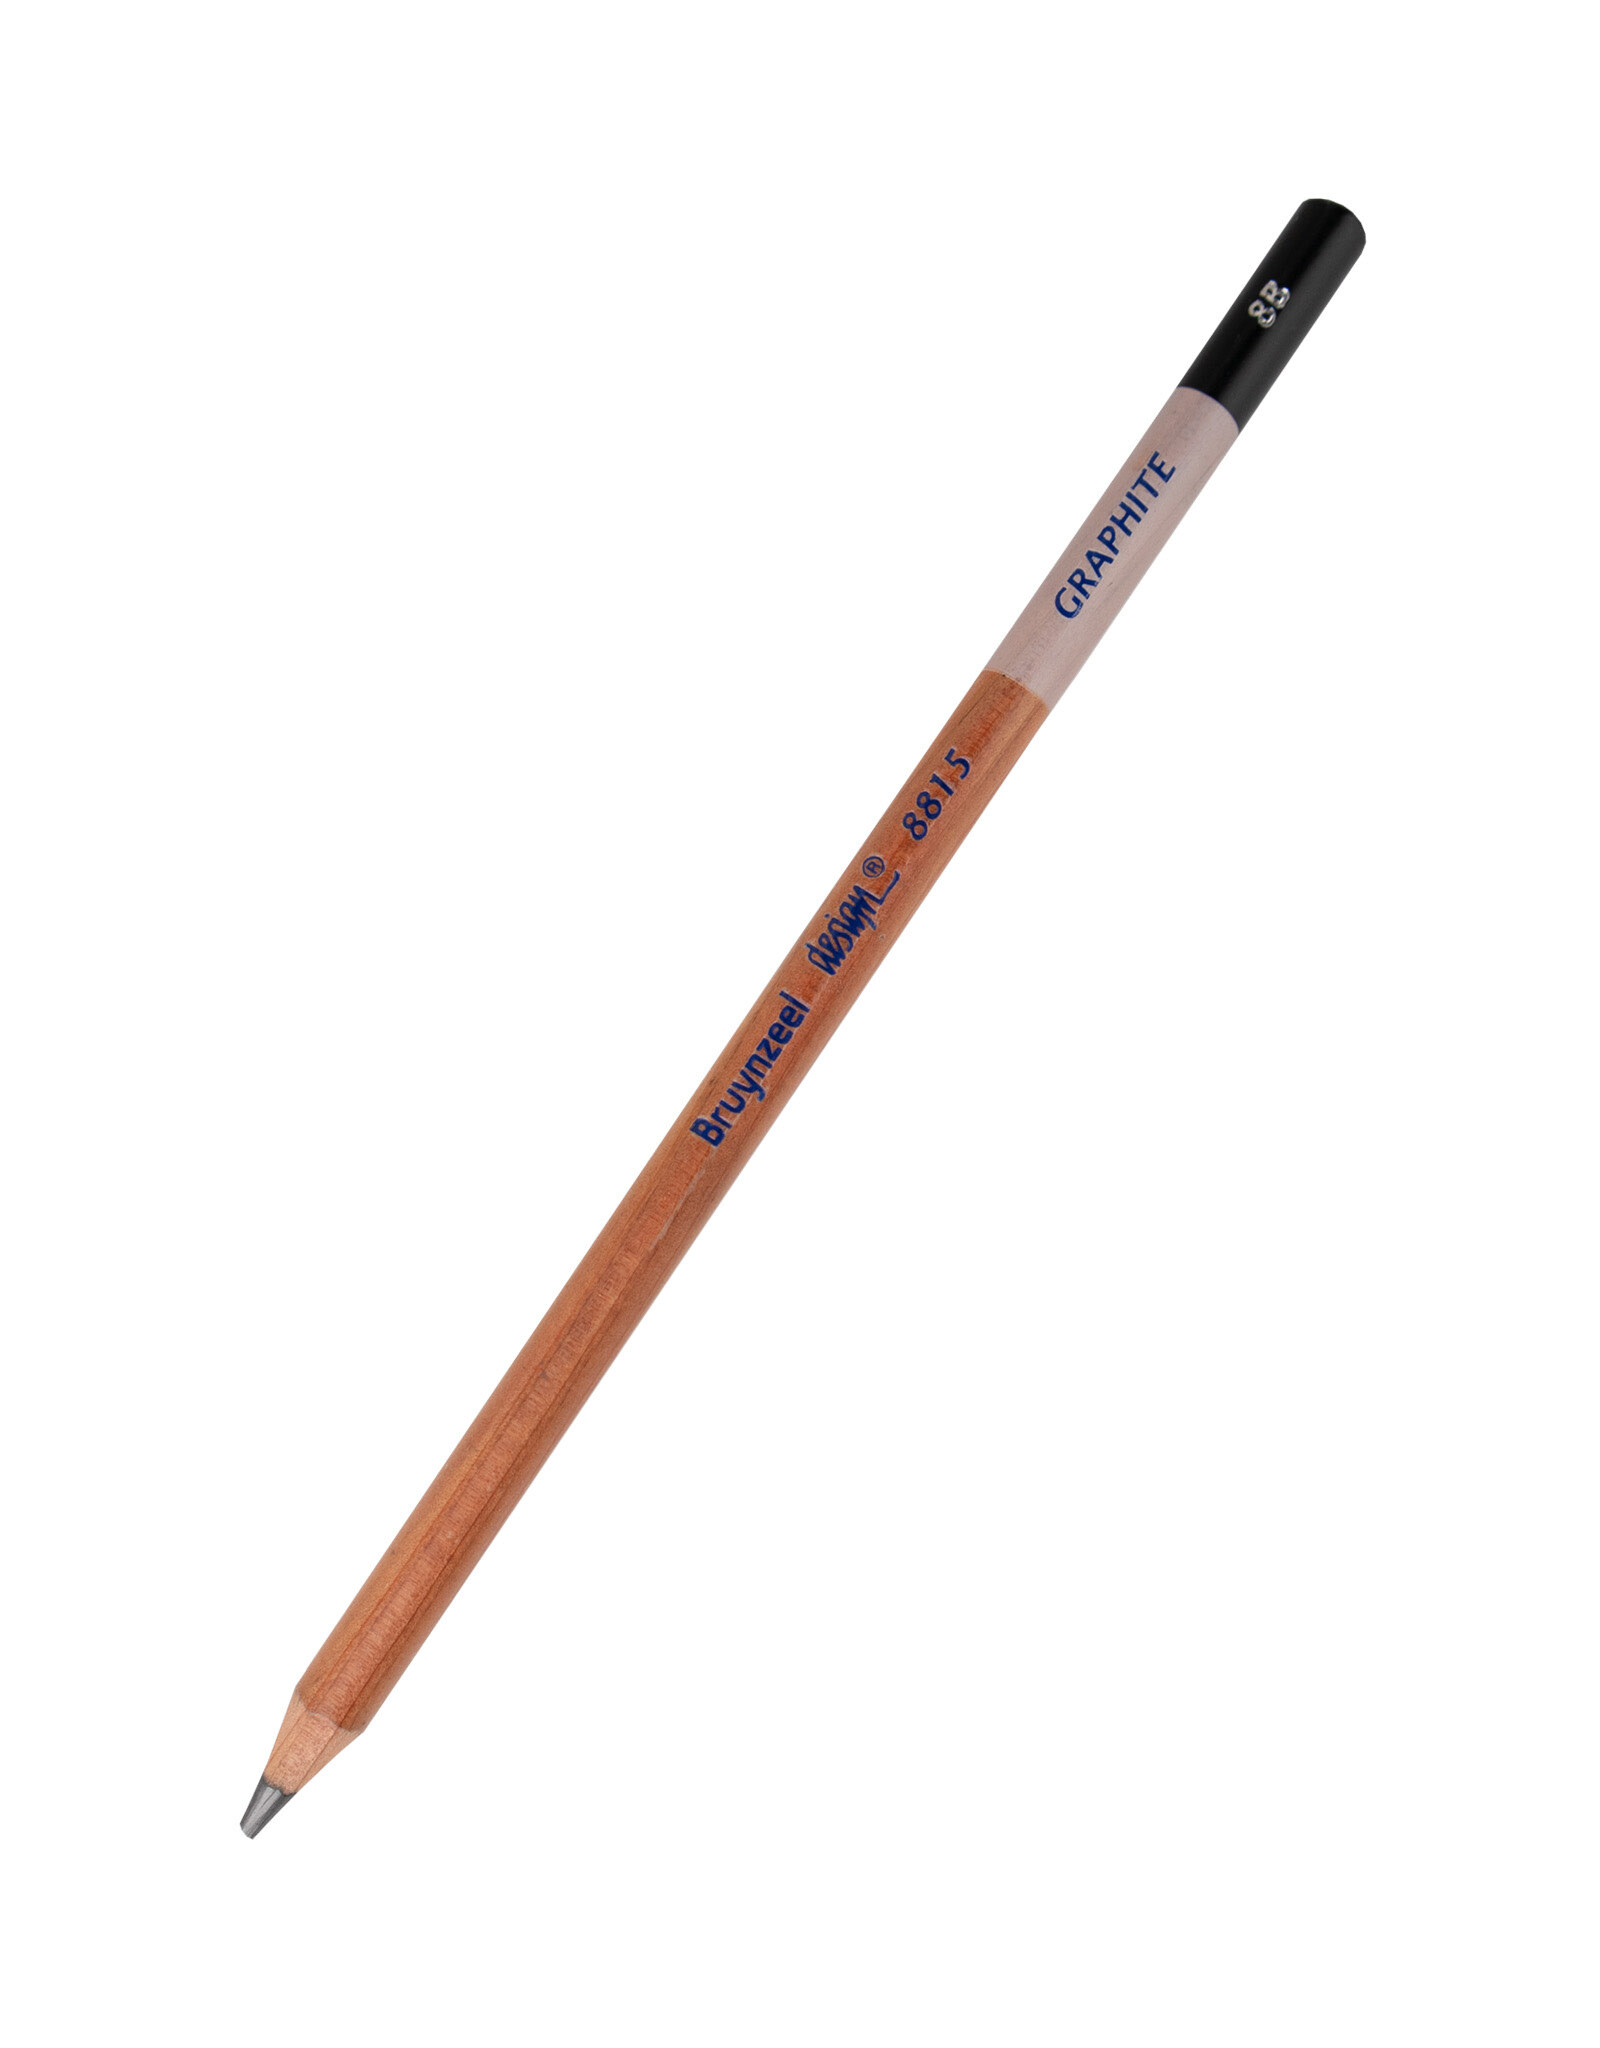 Royal Talens Bruynzeel Design Graphite Pencil, 8B